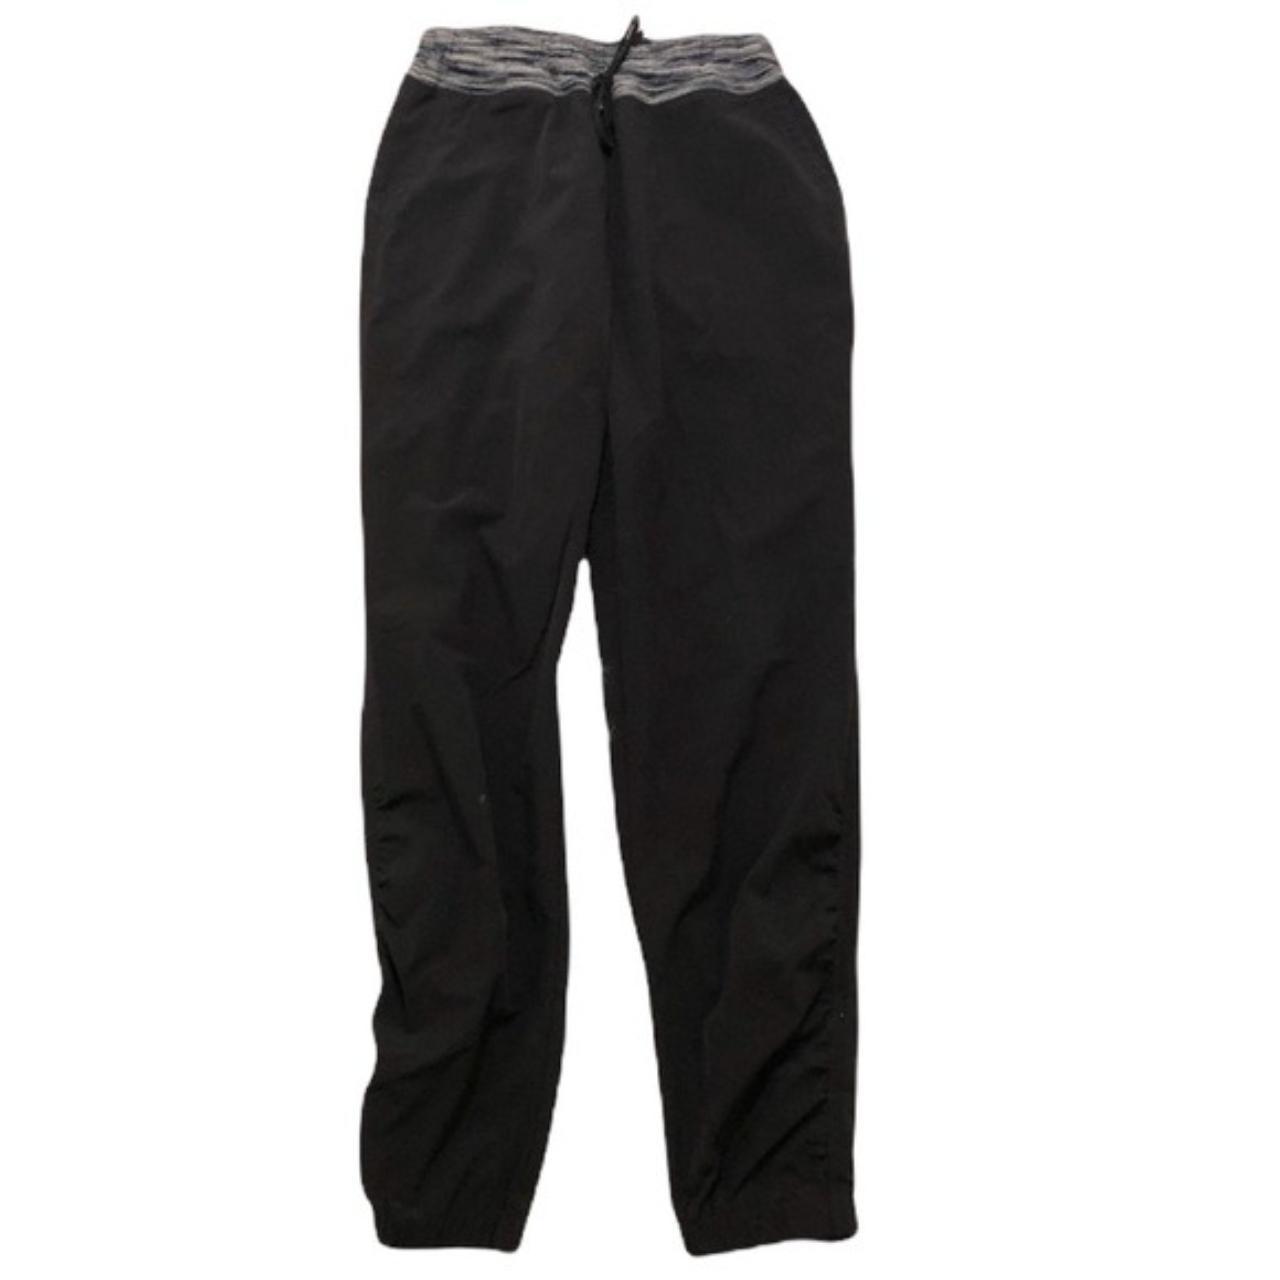 Zenergy Chico's UPF black pants side leg zip - Depop